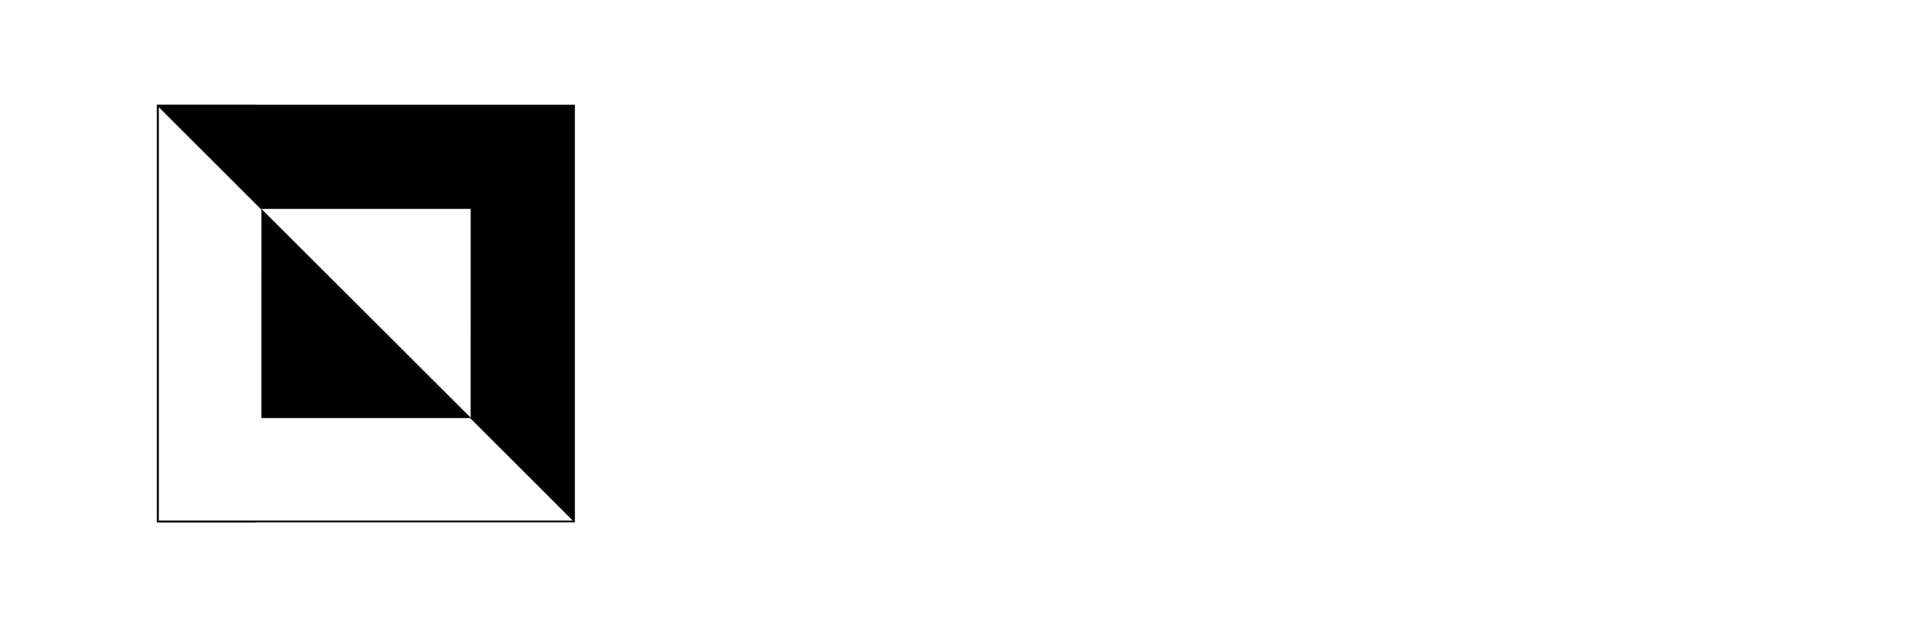 Schrock Construction Inc